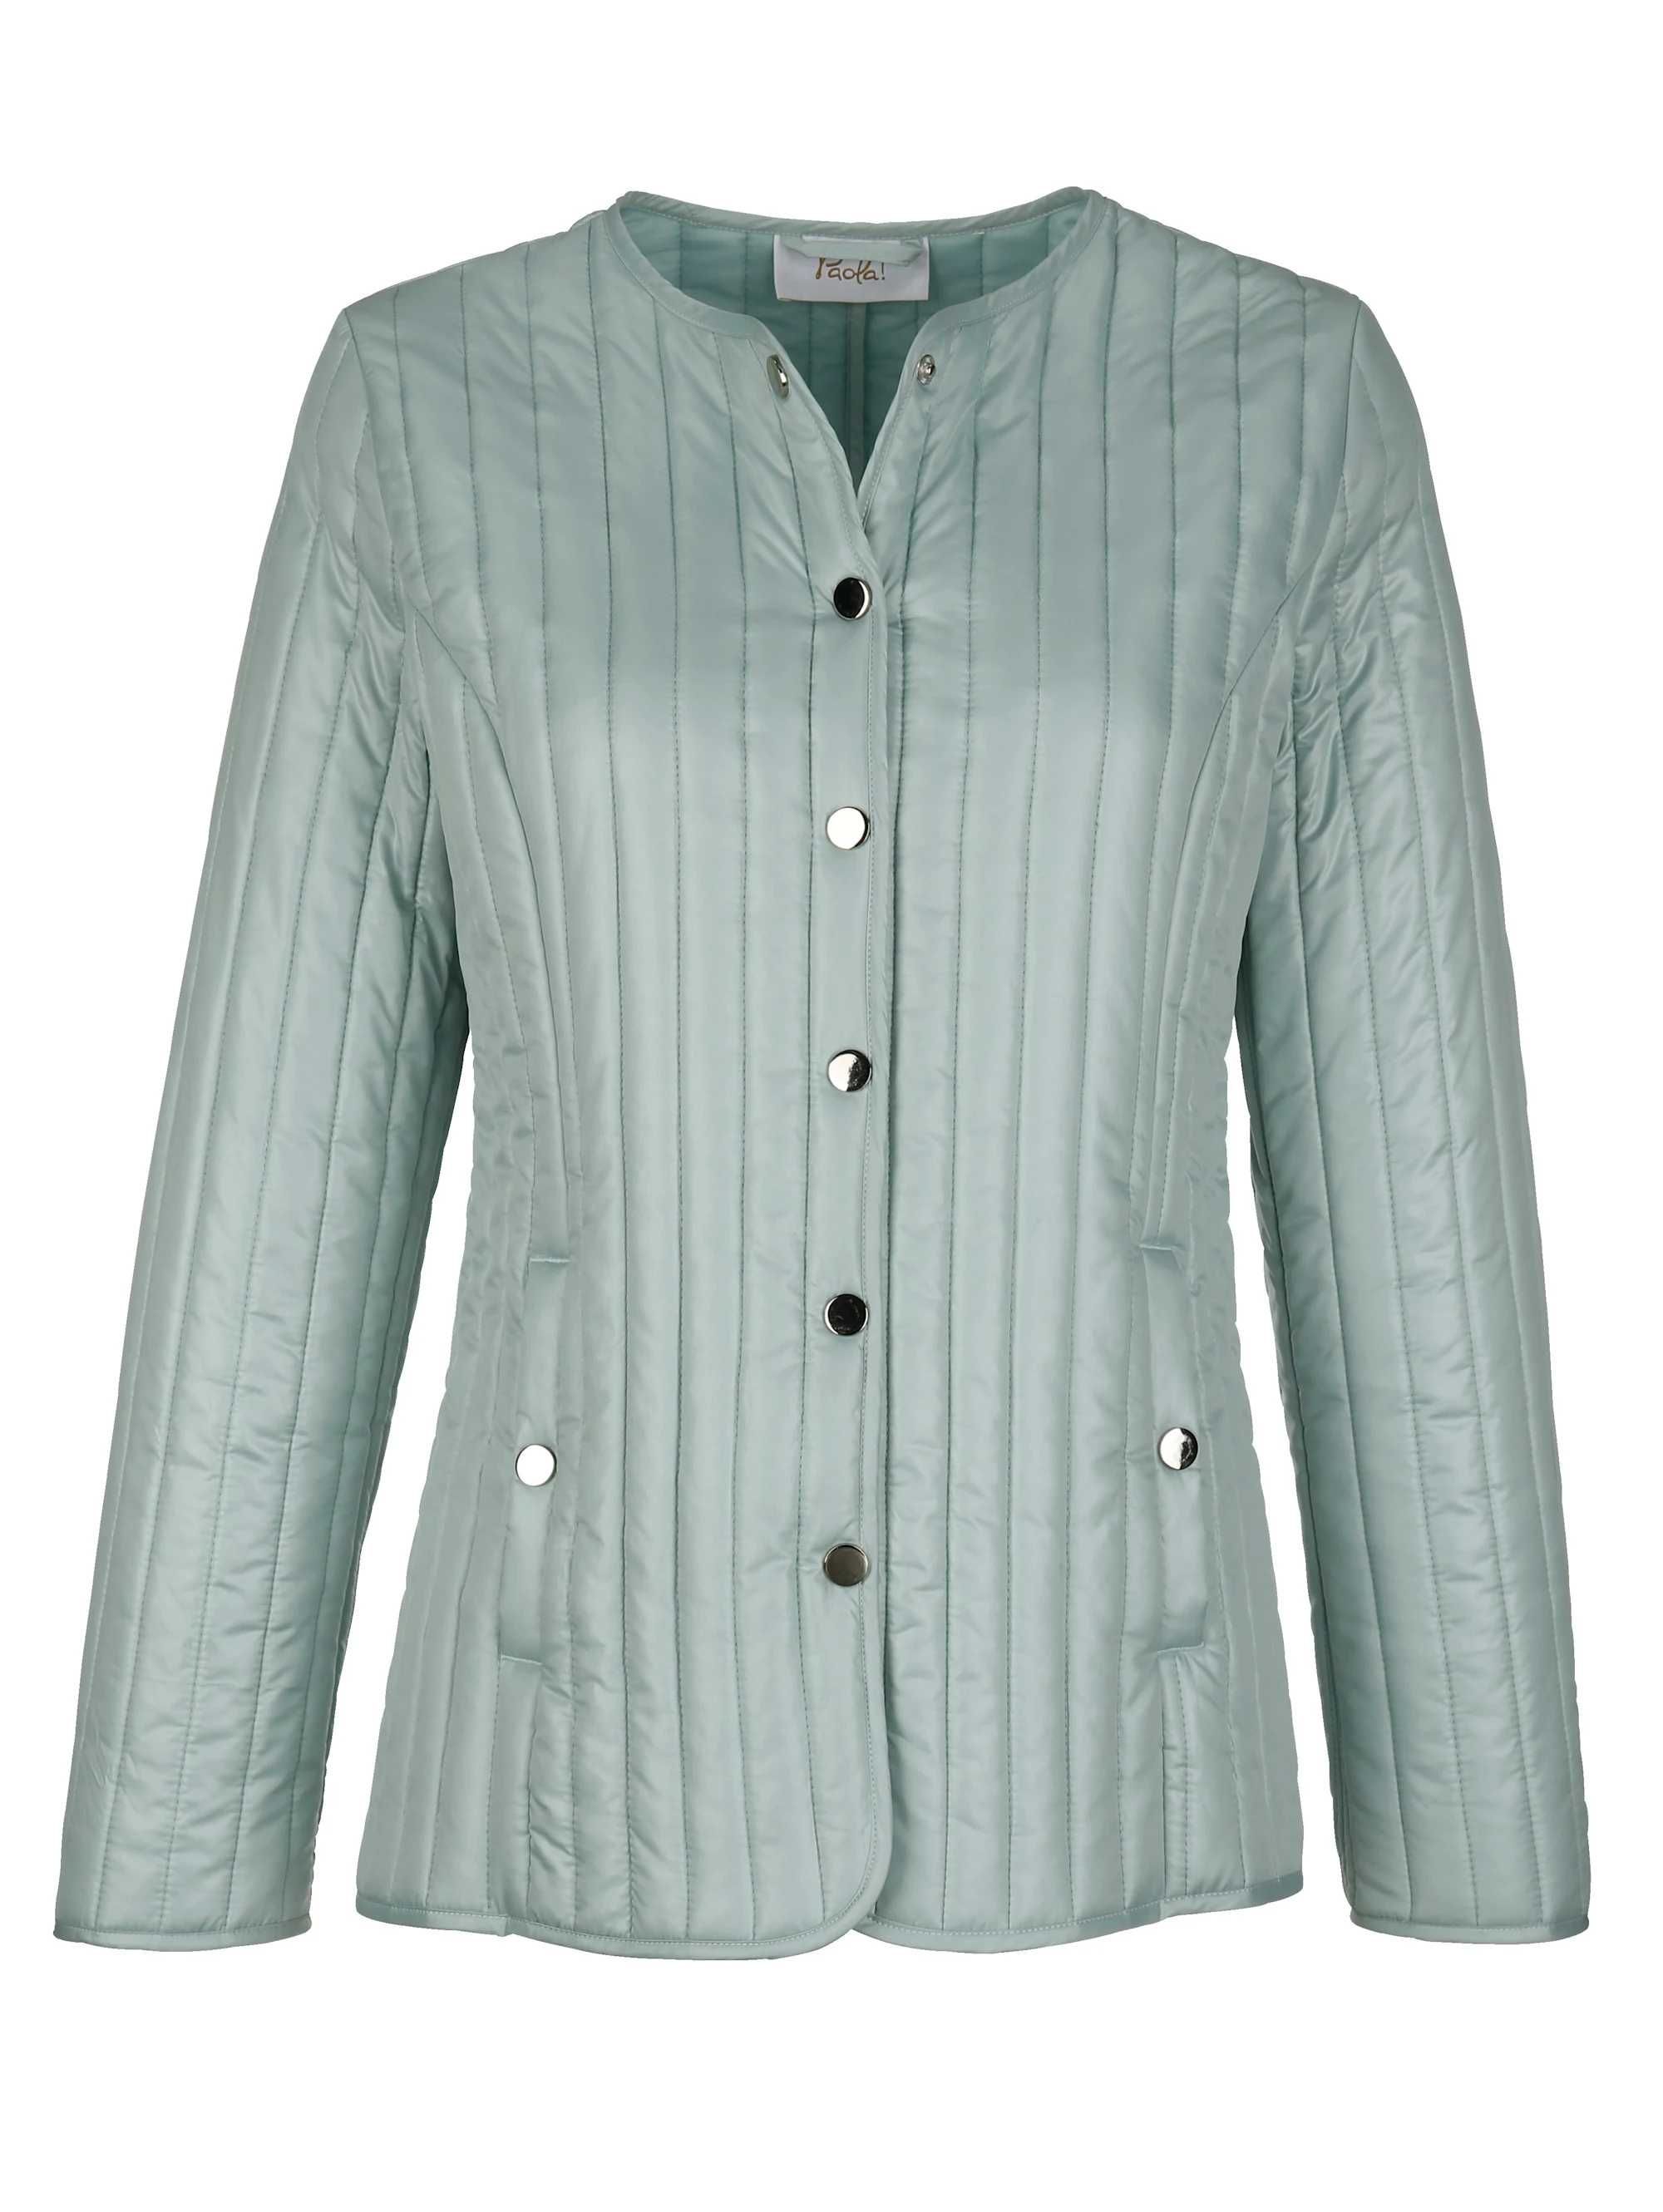 Новый пиджак-жакет, куртка размер наш 50 европа 44 бренд Paola